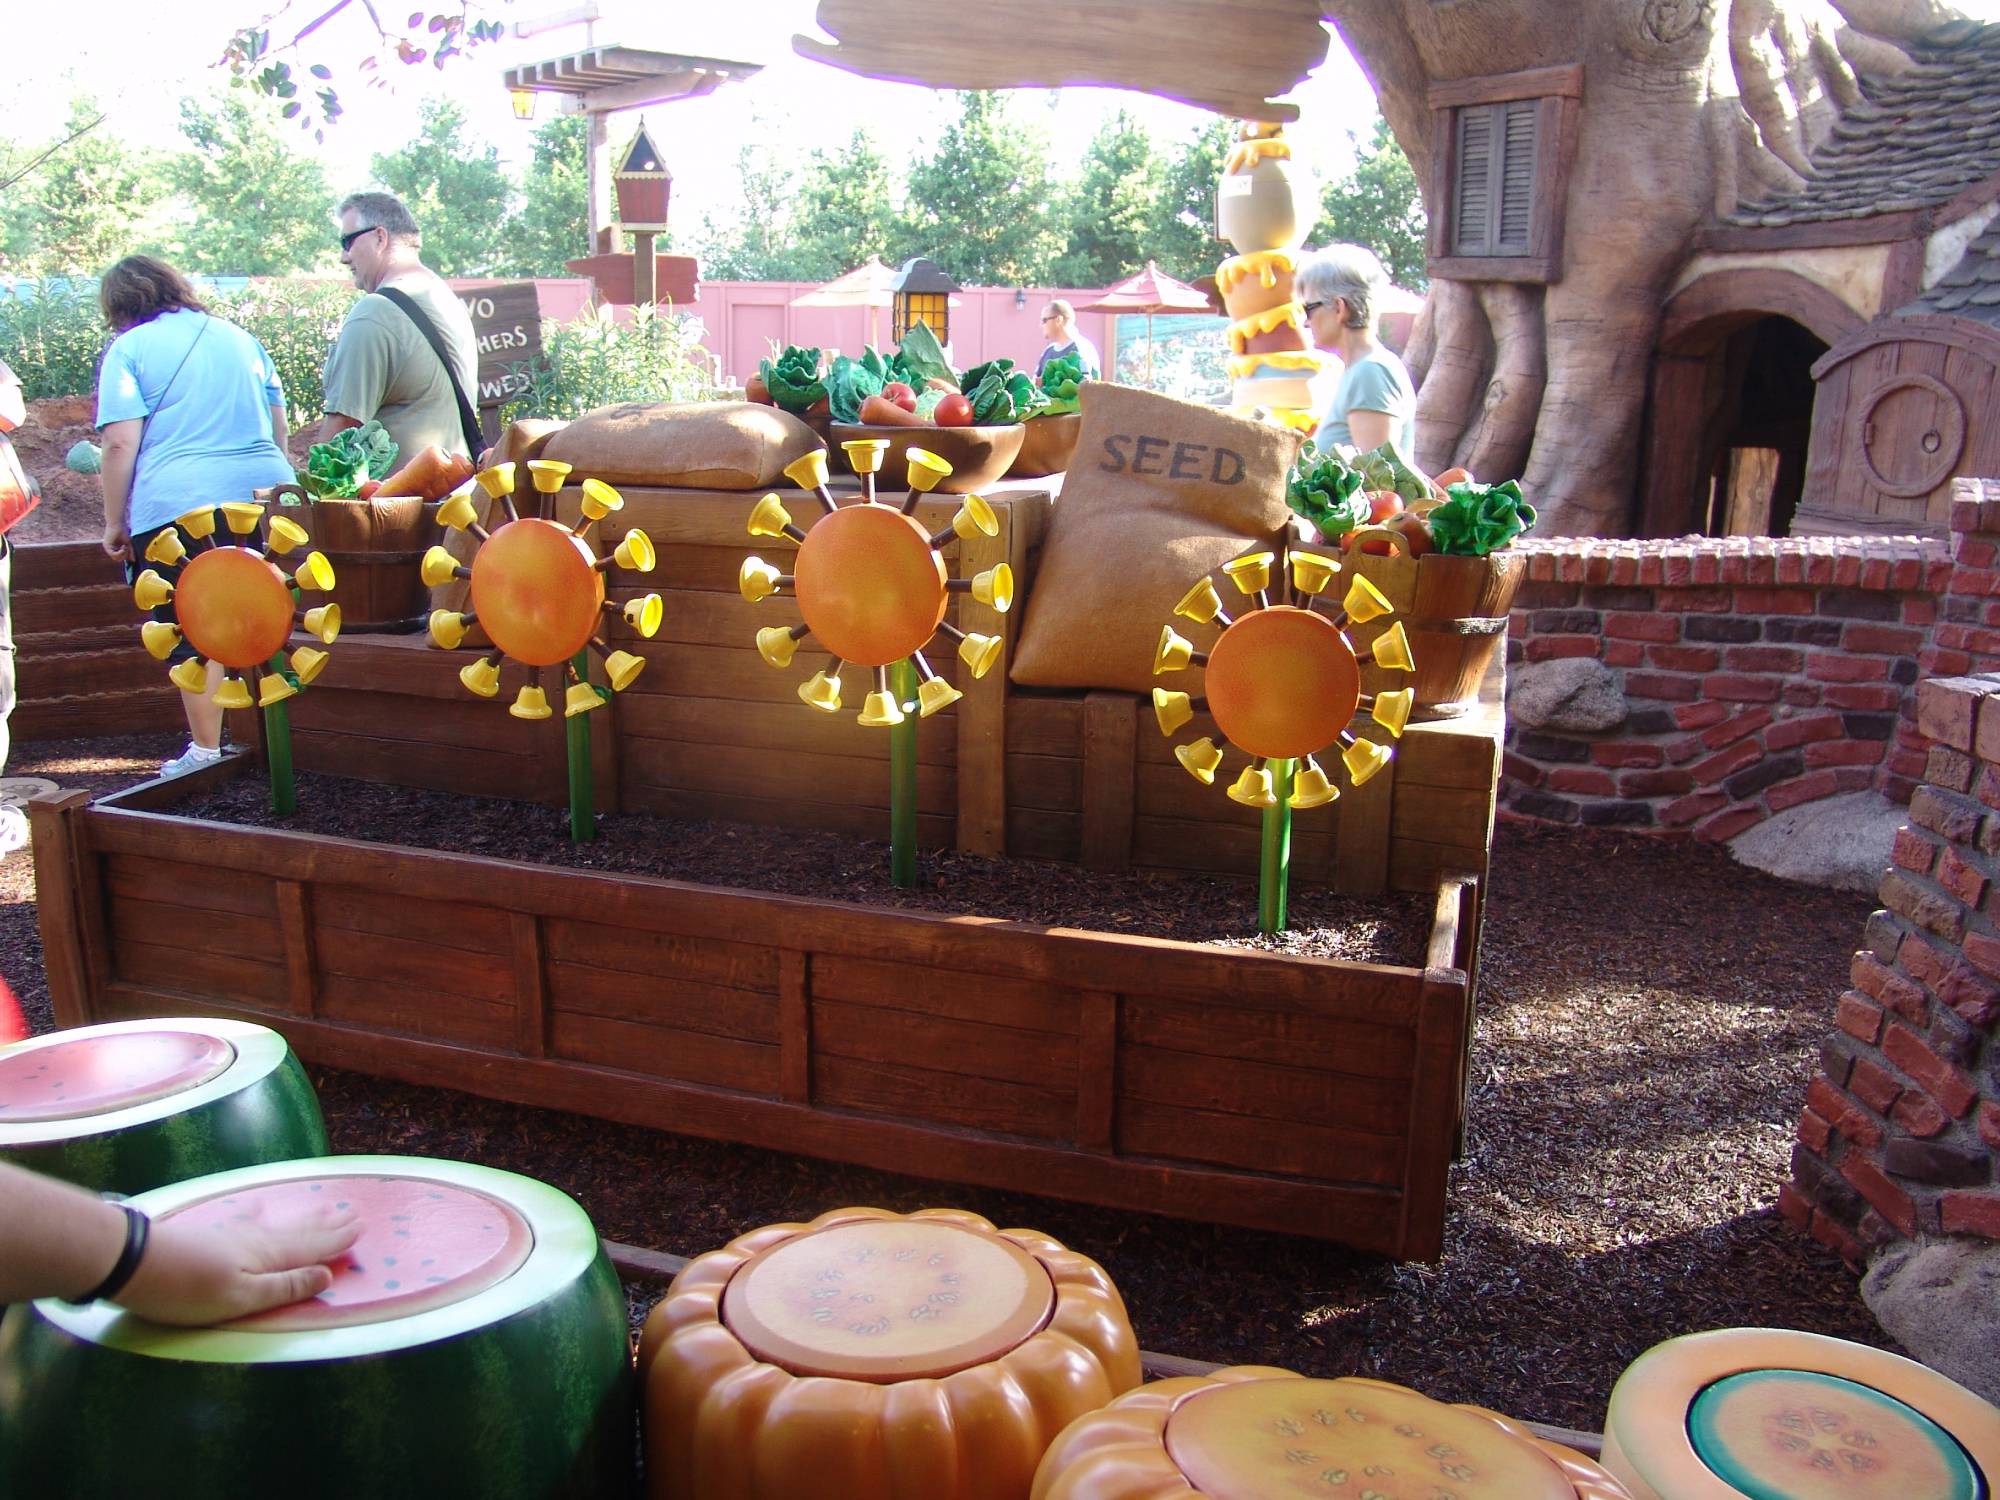 Magic Kingdom - Winnie the Pooh queue